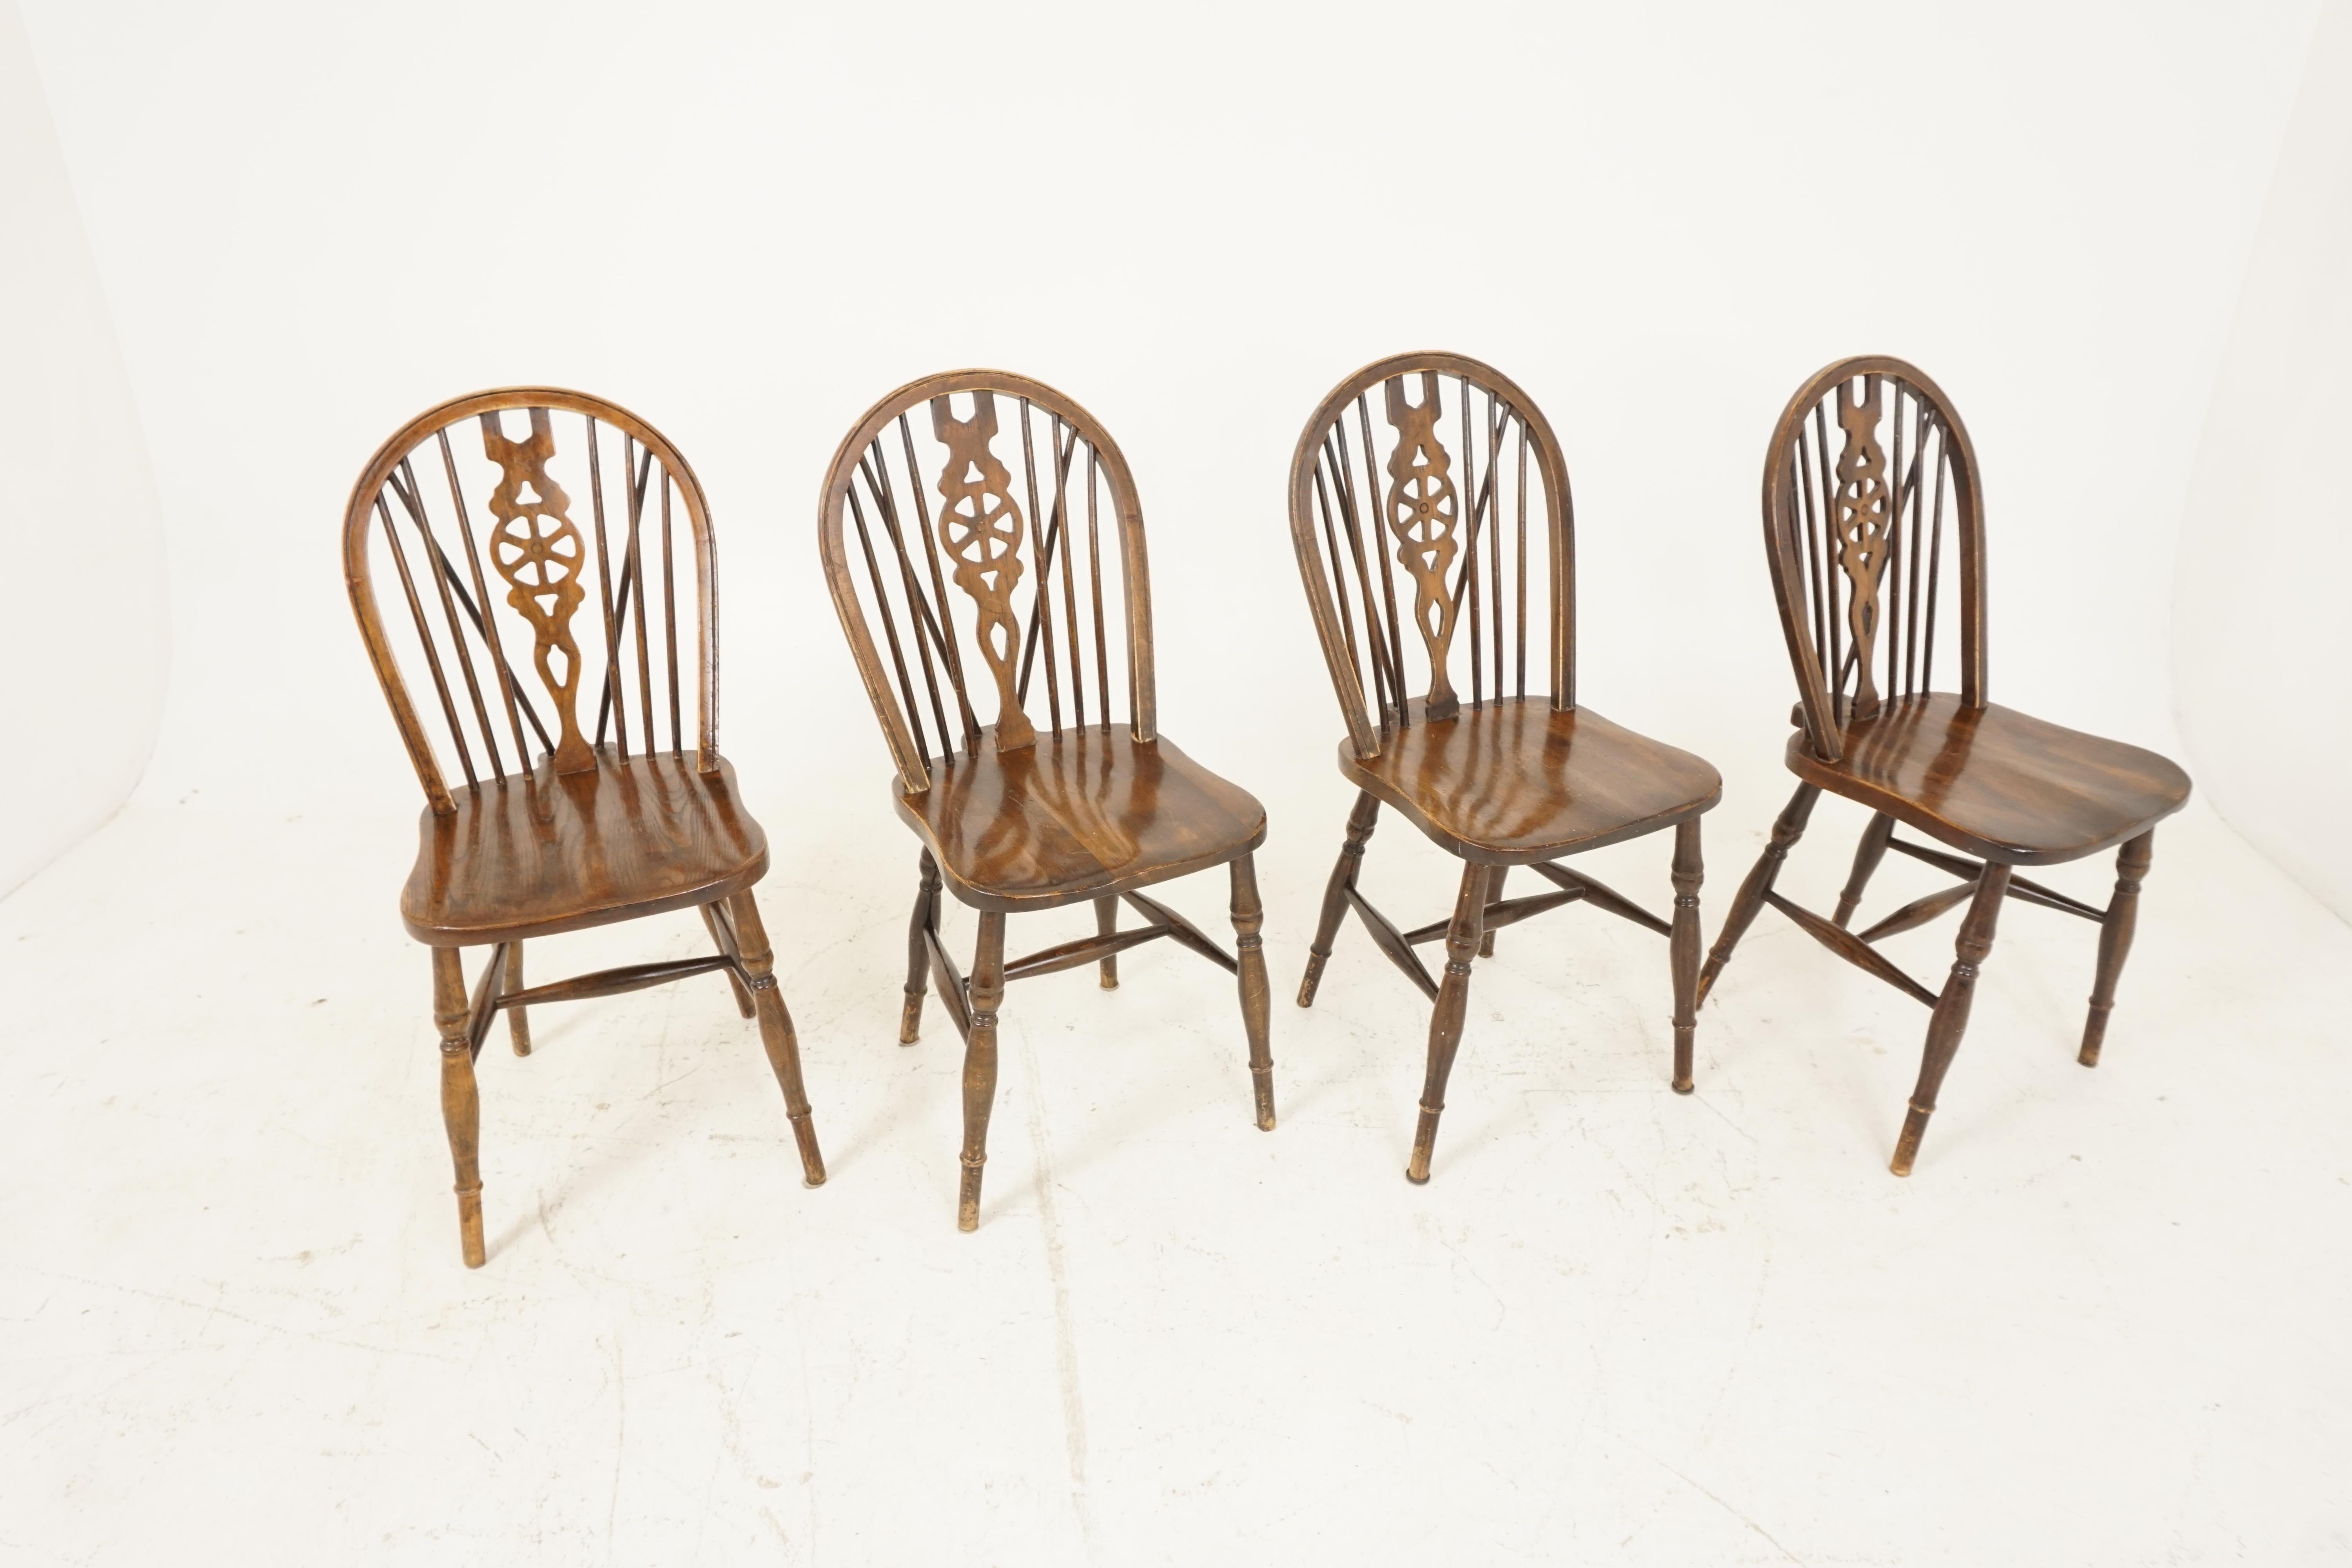 Hand-Crafted 4 Vintage Beechwood Chairs, Wheelback Windsor Chairs, Canada 1940, B2270